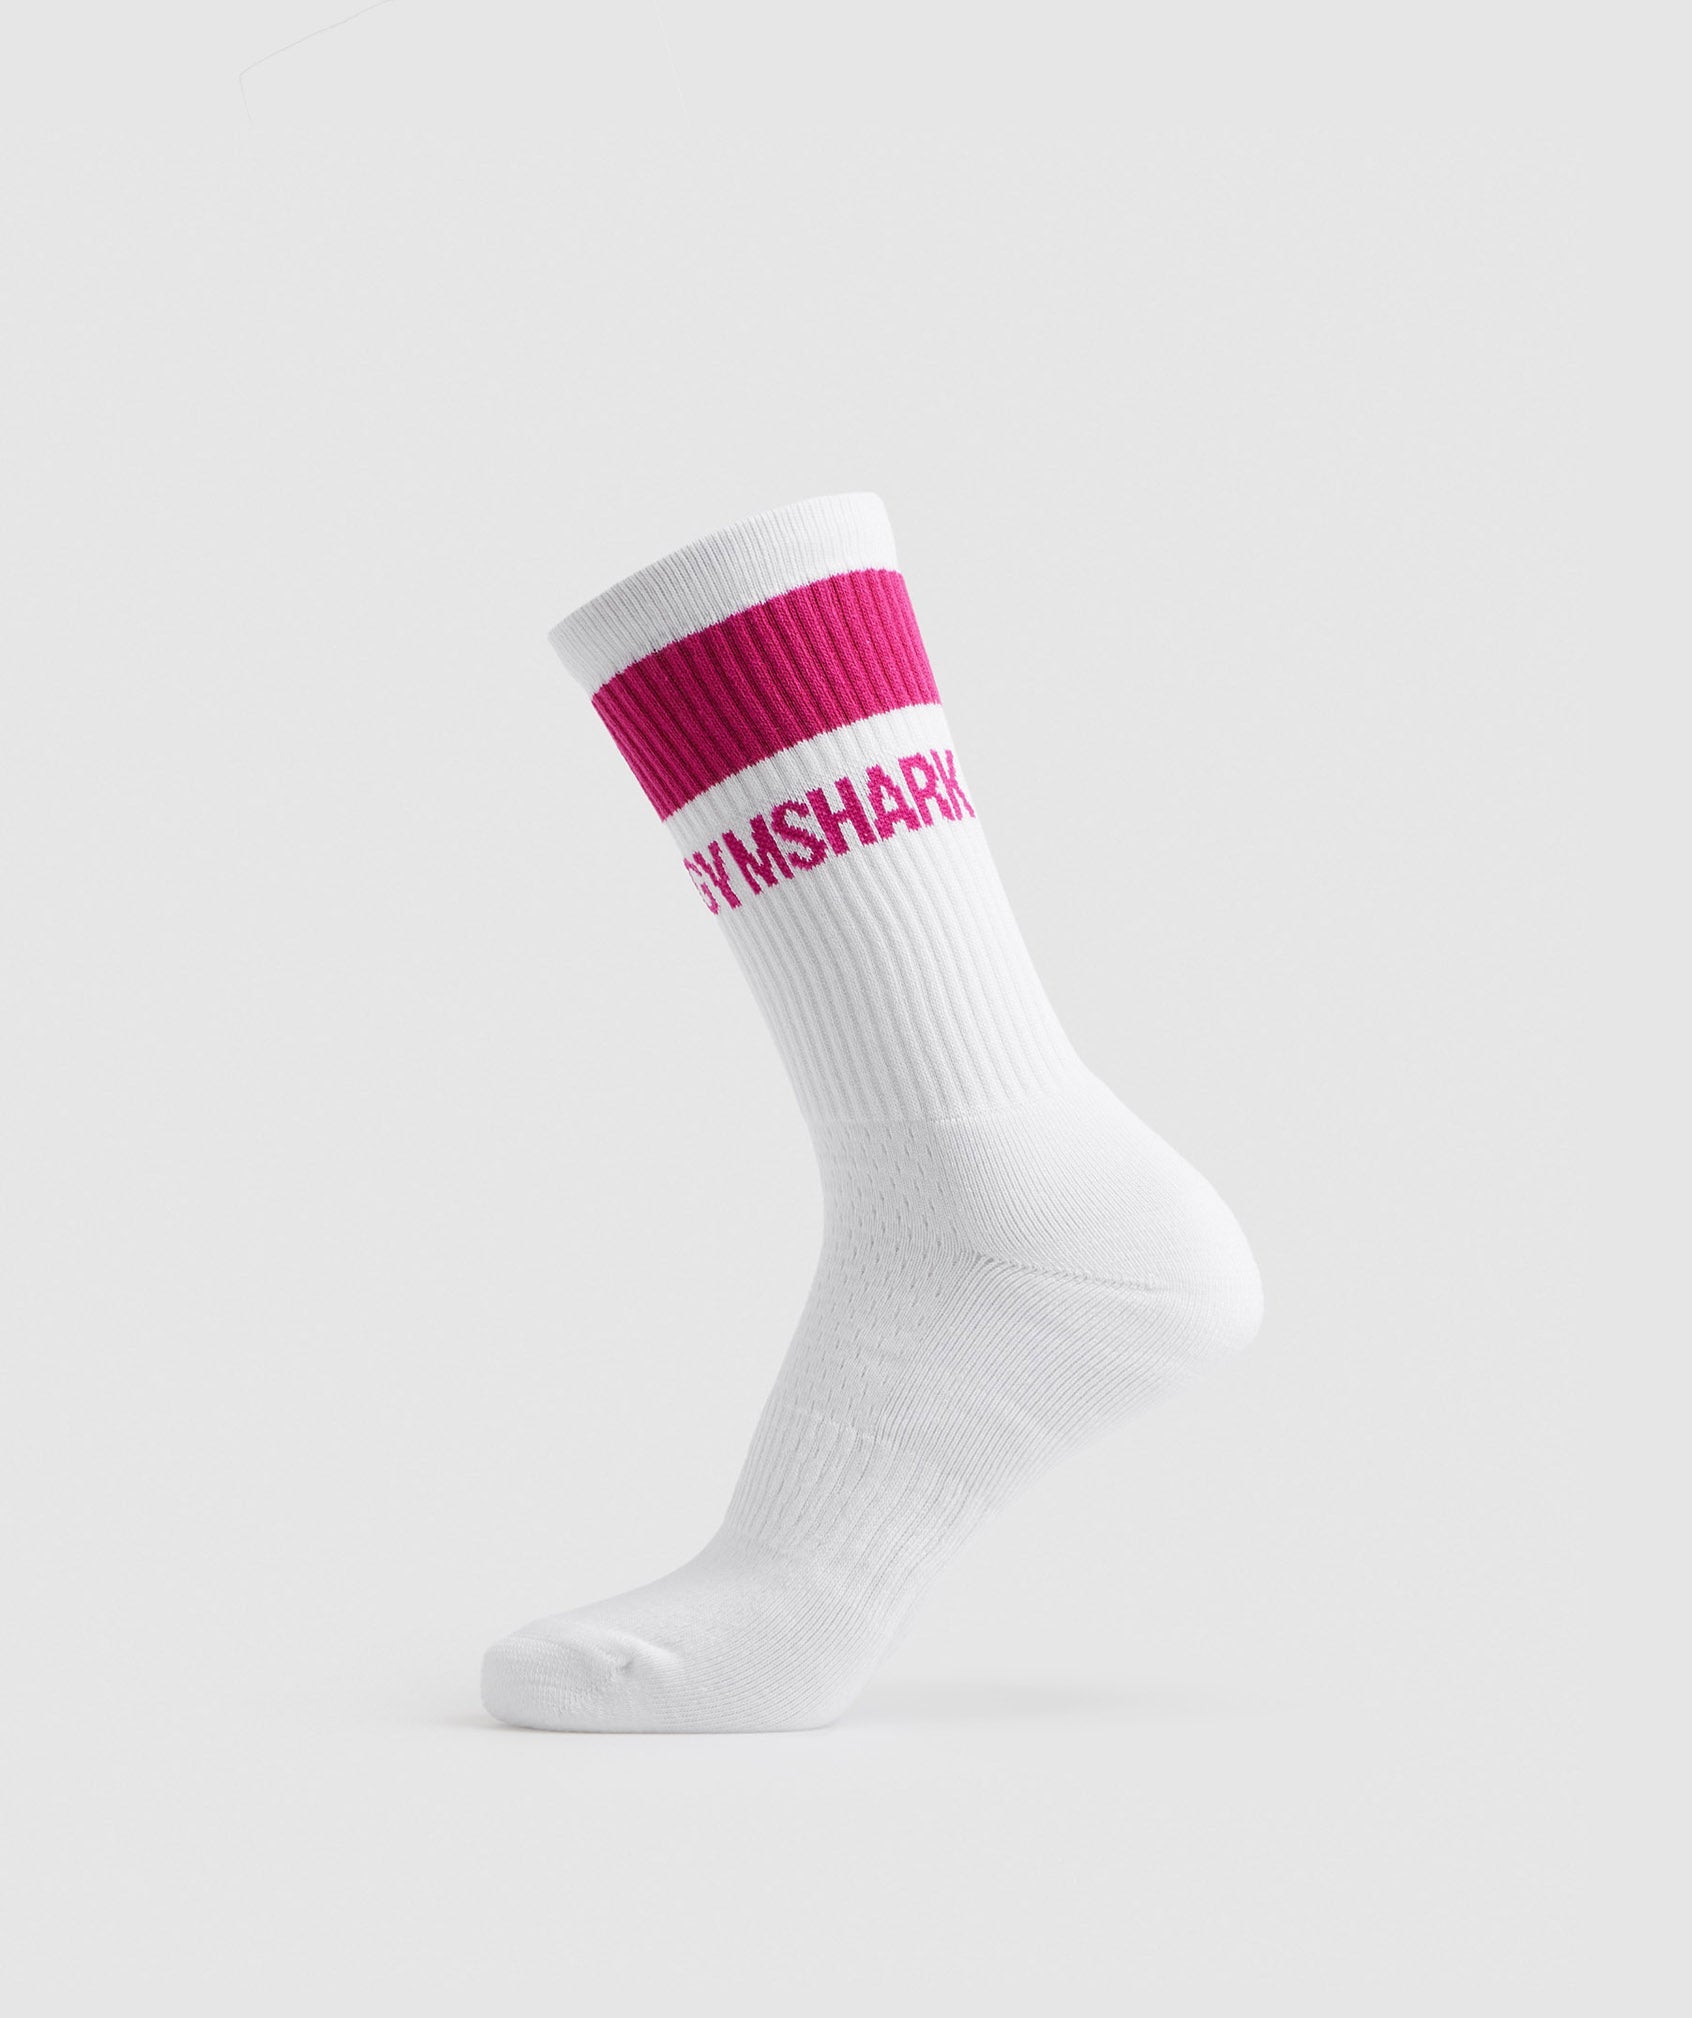 Premium Jacquard Single Socks in White/Magenta Pink - view 1